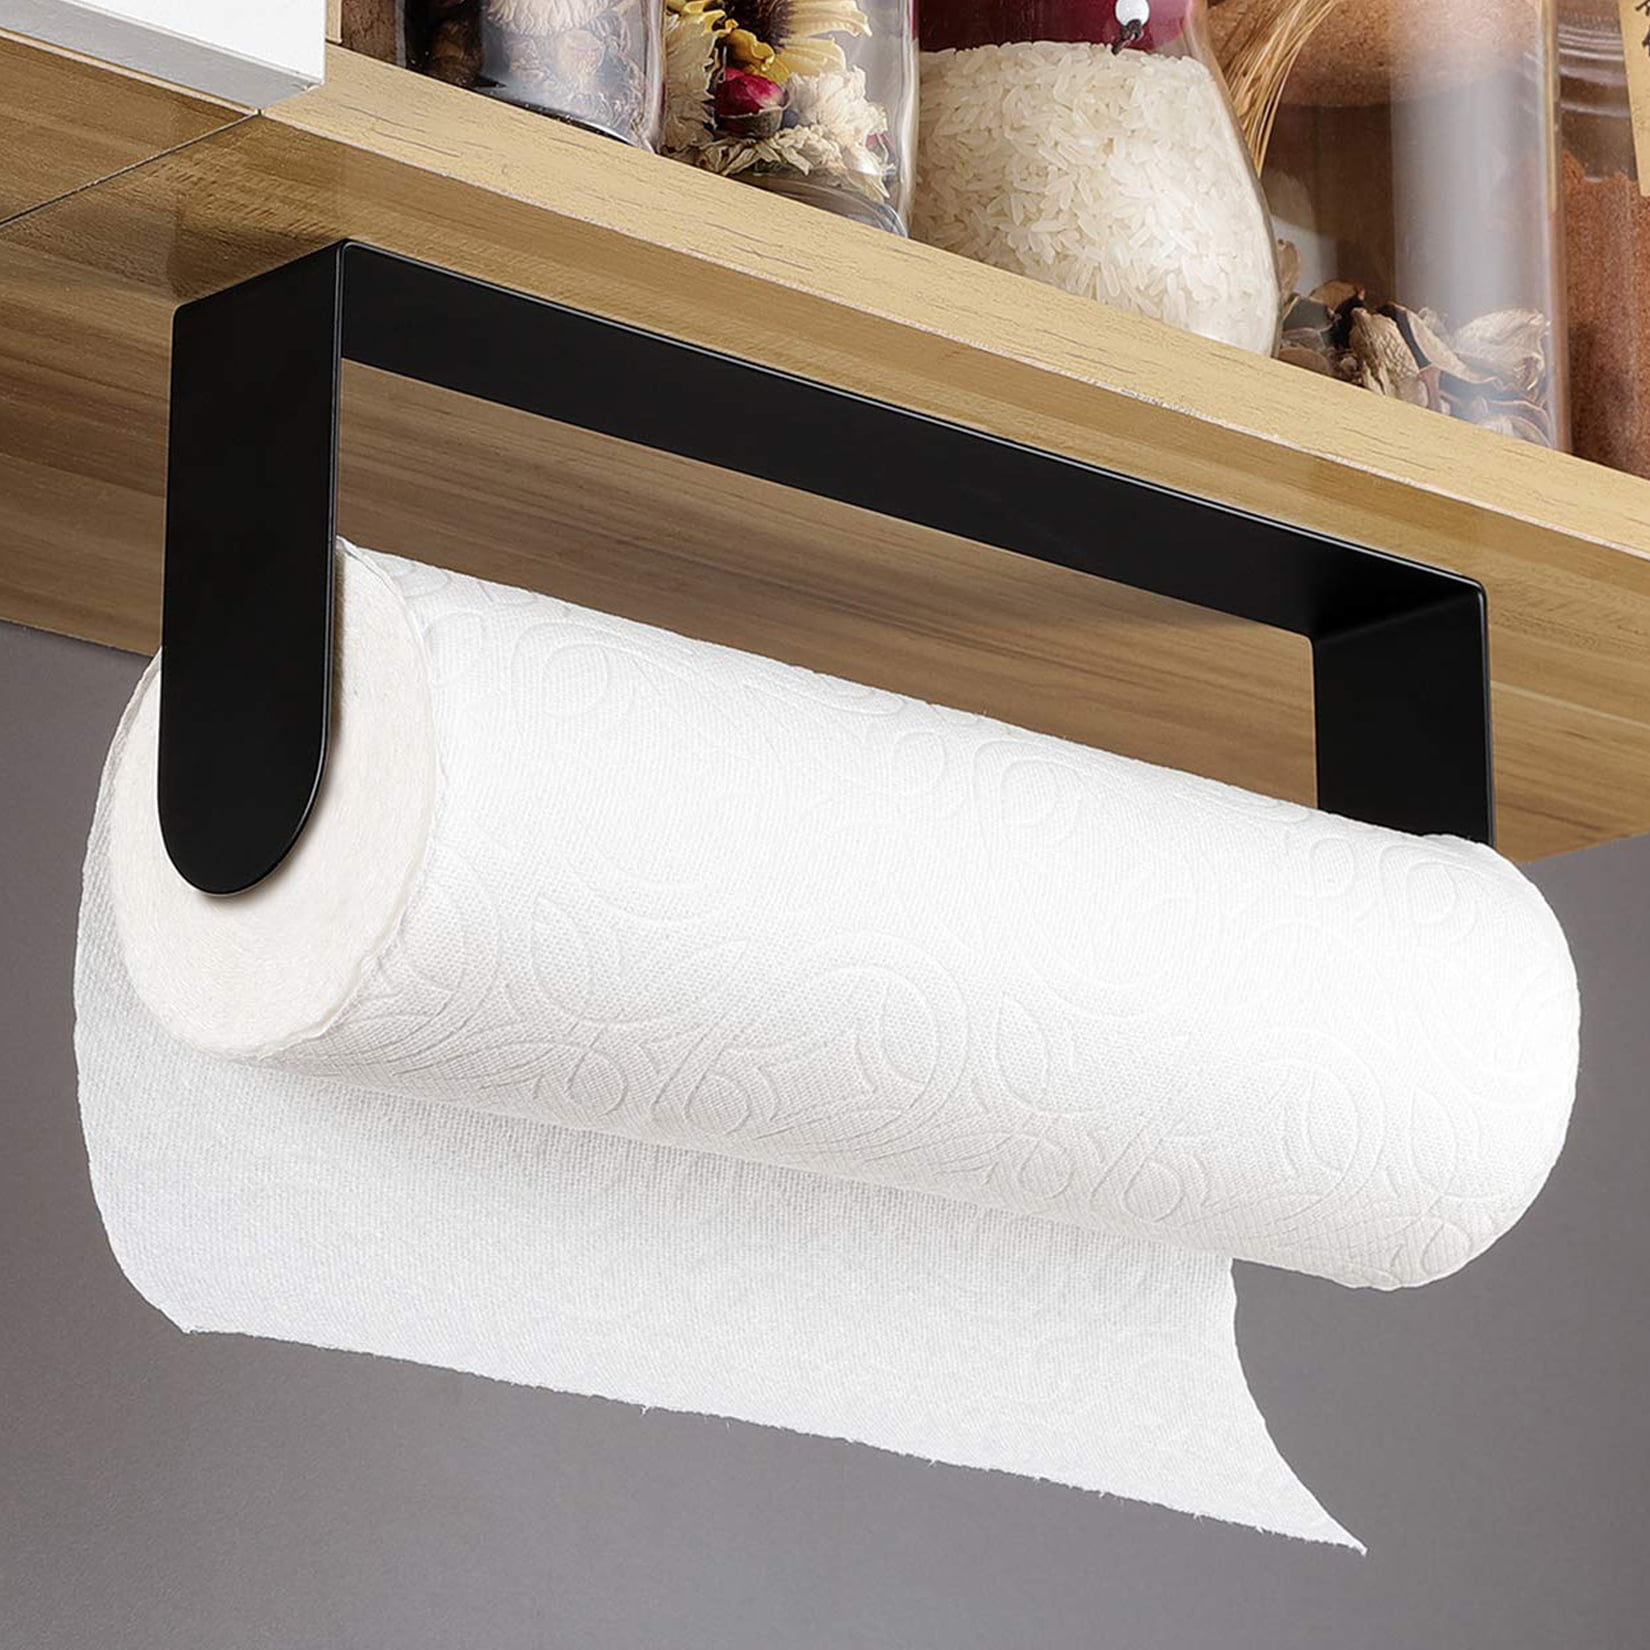 YIGII Paper Towel Holder Black KH018YH - Tools for Kitchen & Bathroom